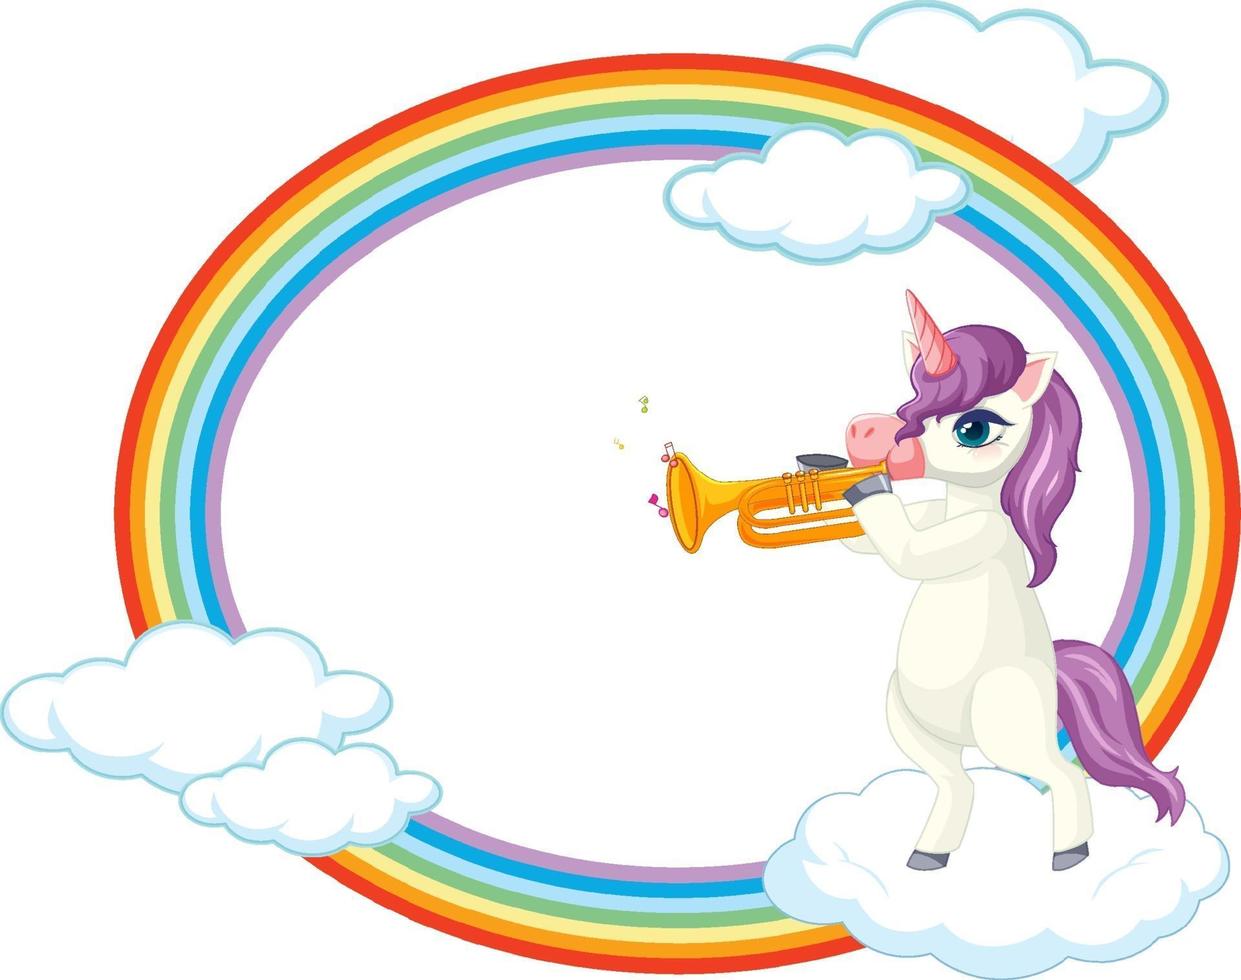 marco de arco iris con lindo personaje de dibujos animados de unicornio vector